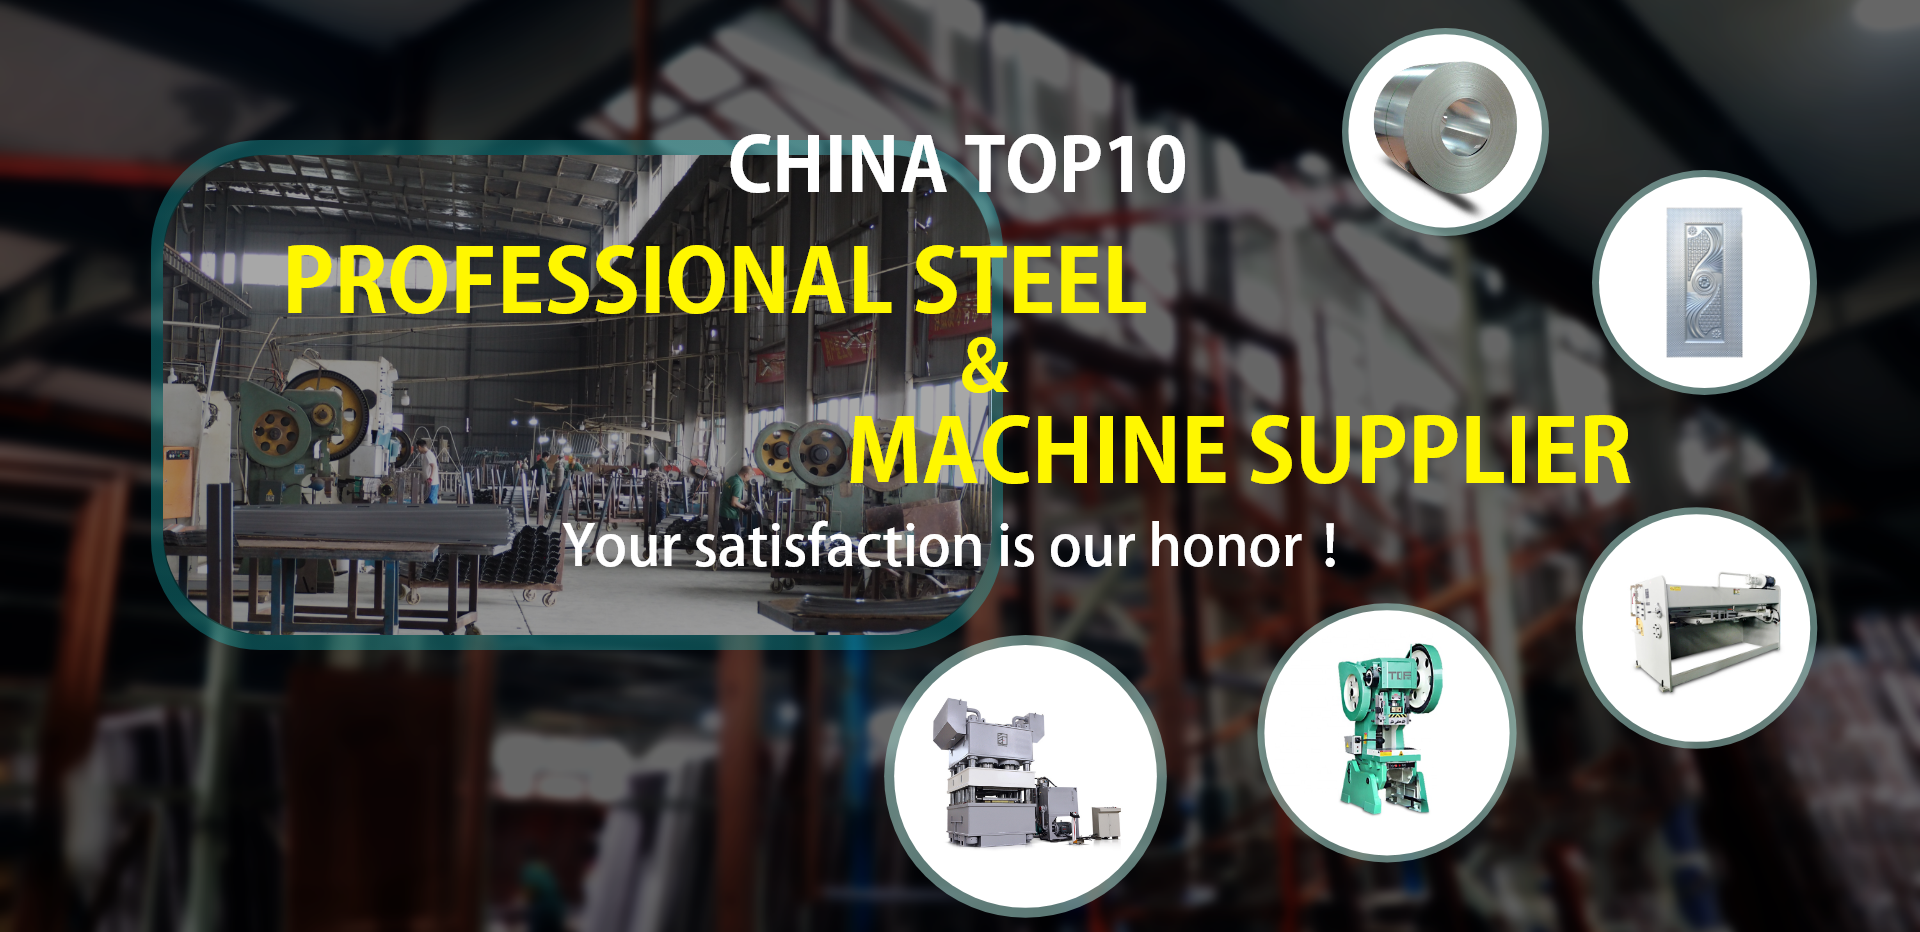 China TOP 10 Professional Steel & Machine Supplier